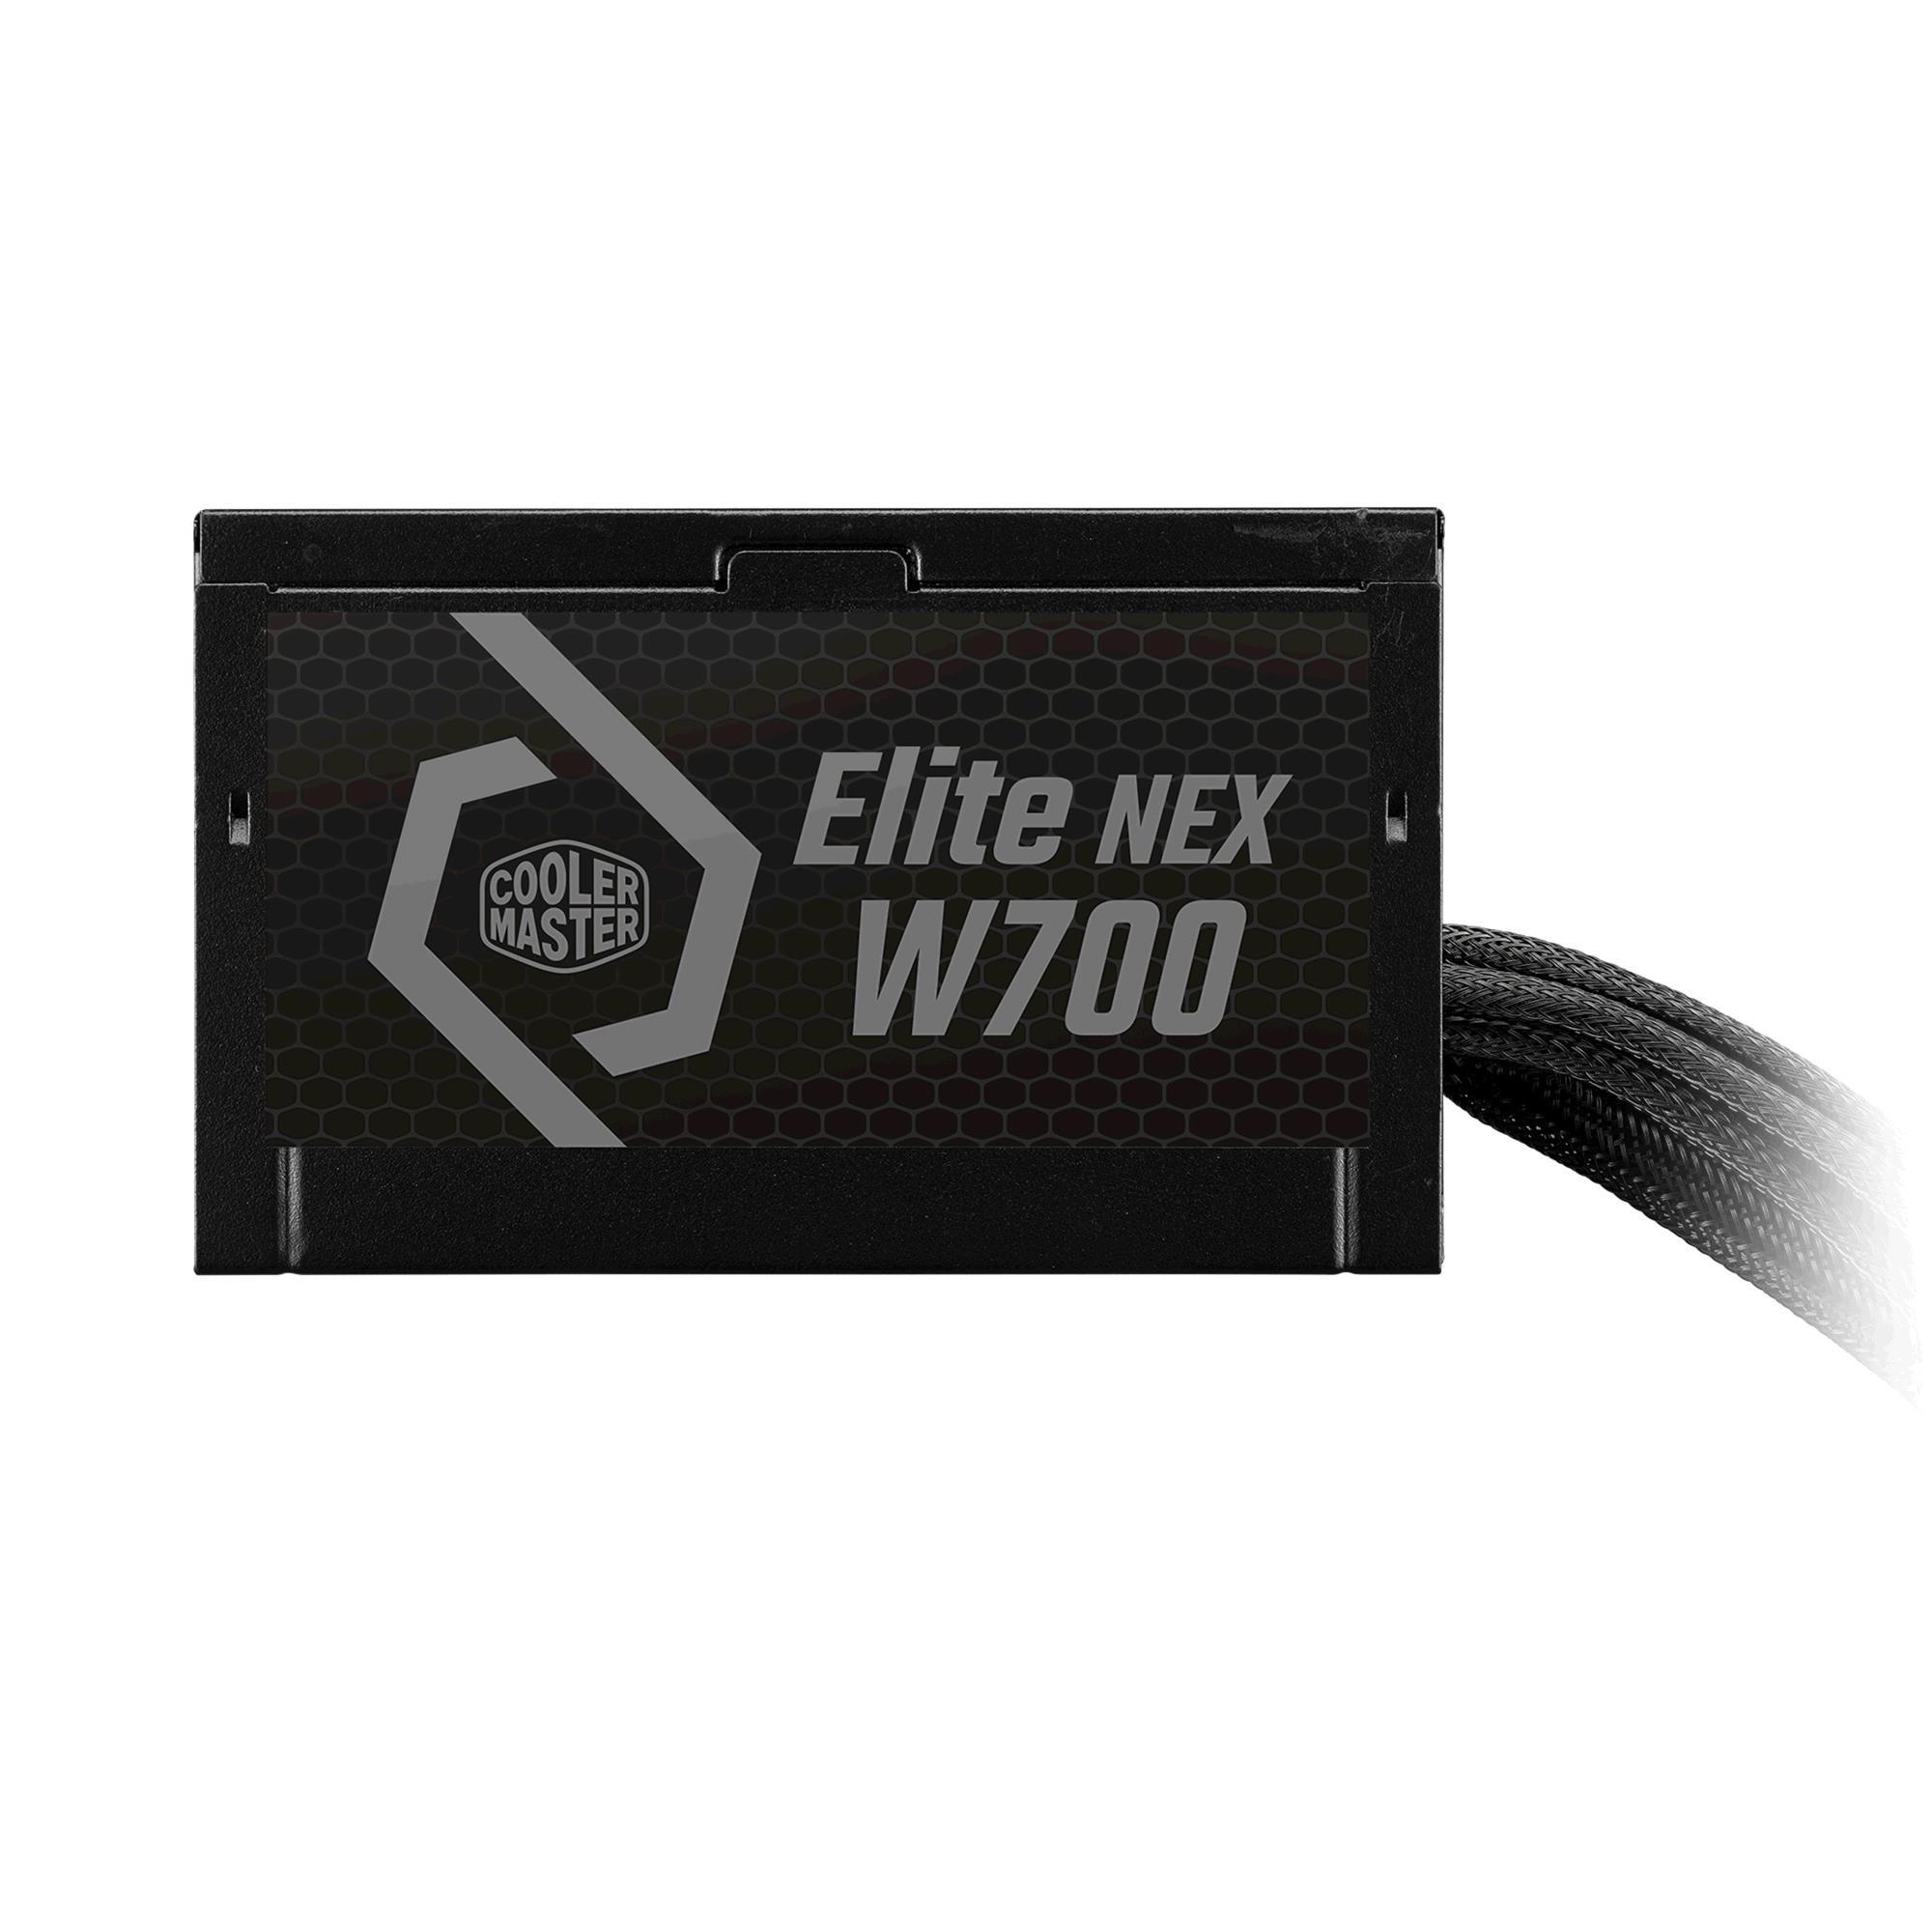 Cooler Master Elite Nex W700 Black